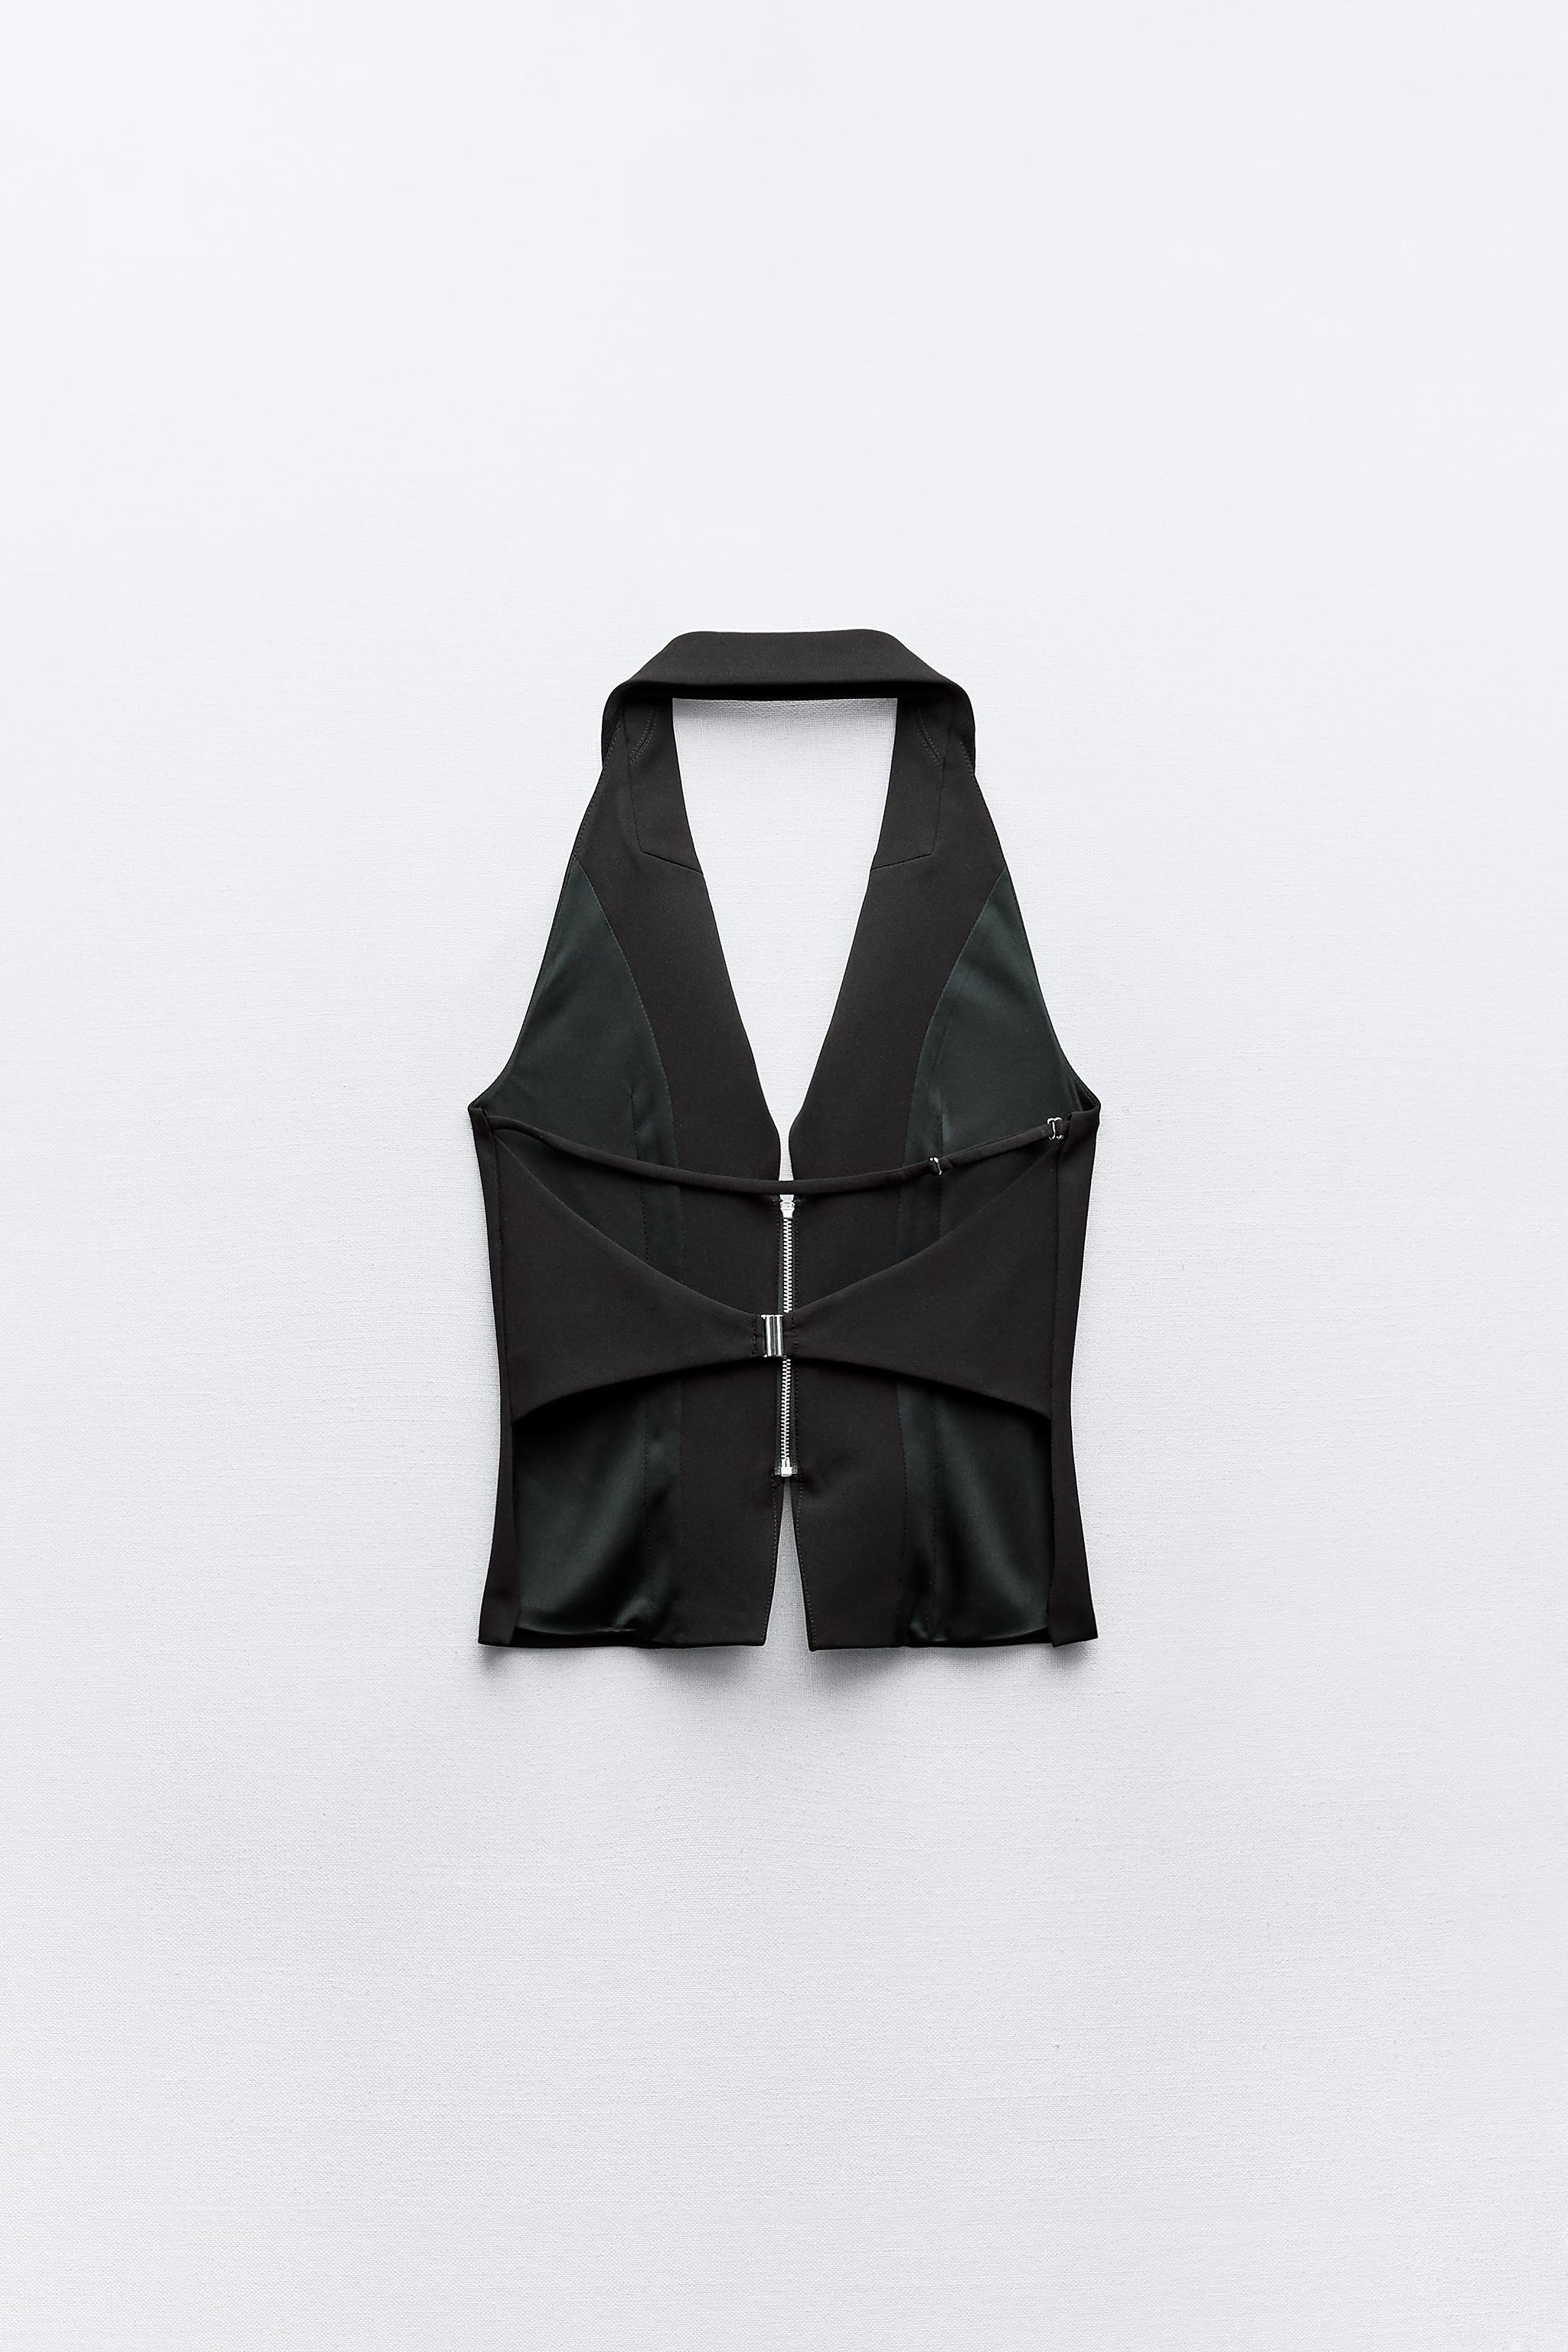 AmélieBoutik Women Halter Turtleneck Open Back Sleeveless Blouse Top (Black  X-Small) at  Women's Clothing store